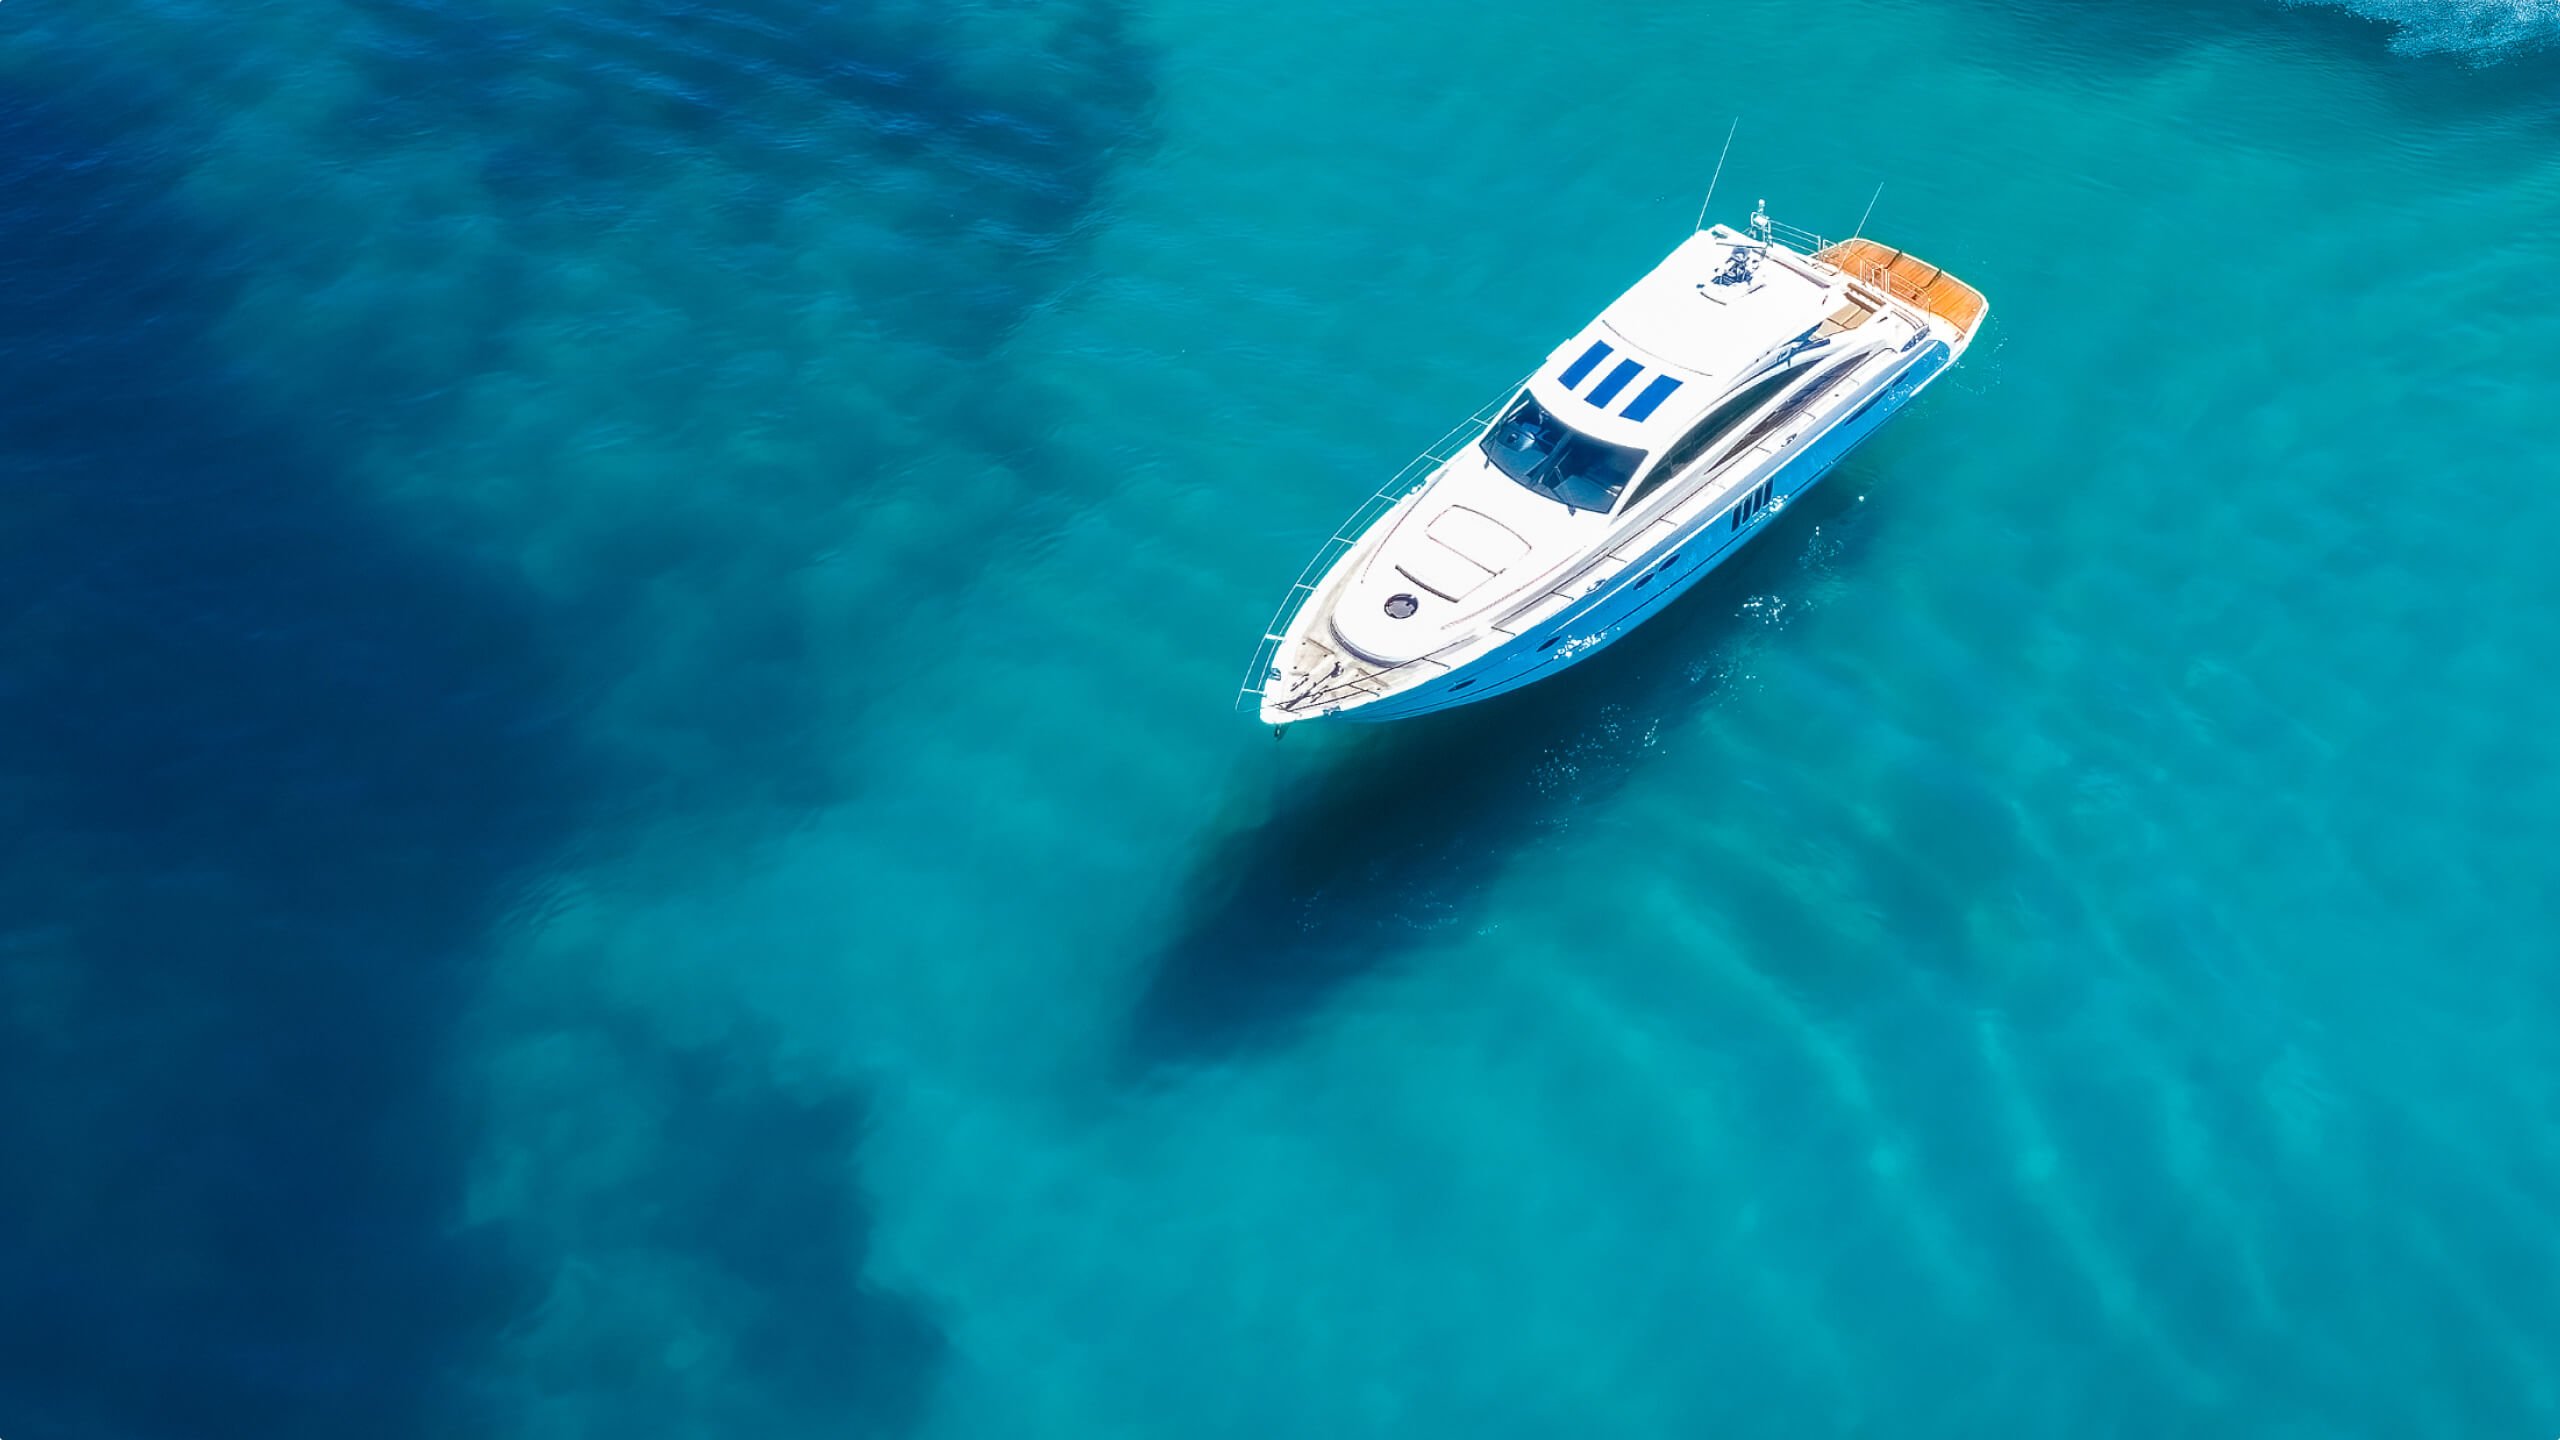 adriatic king super yacht